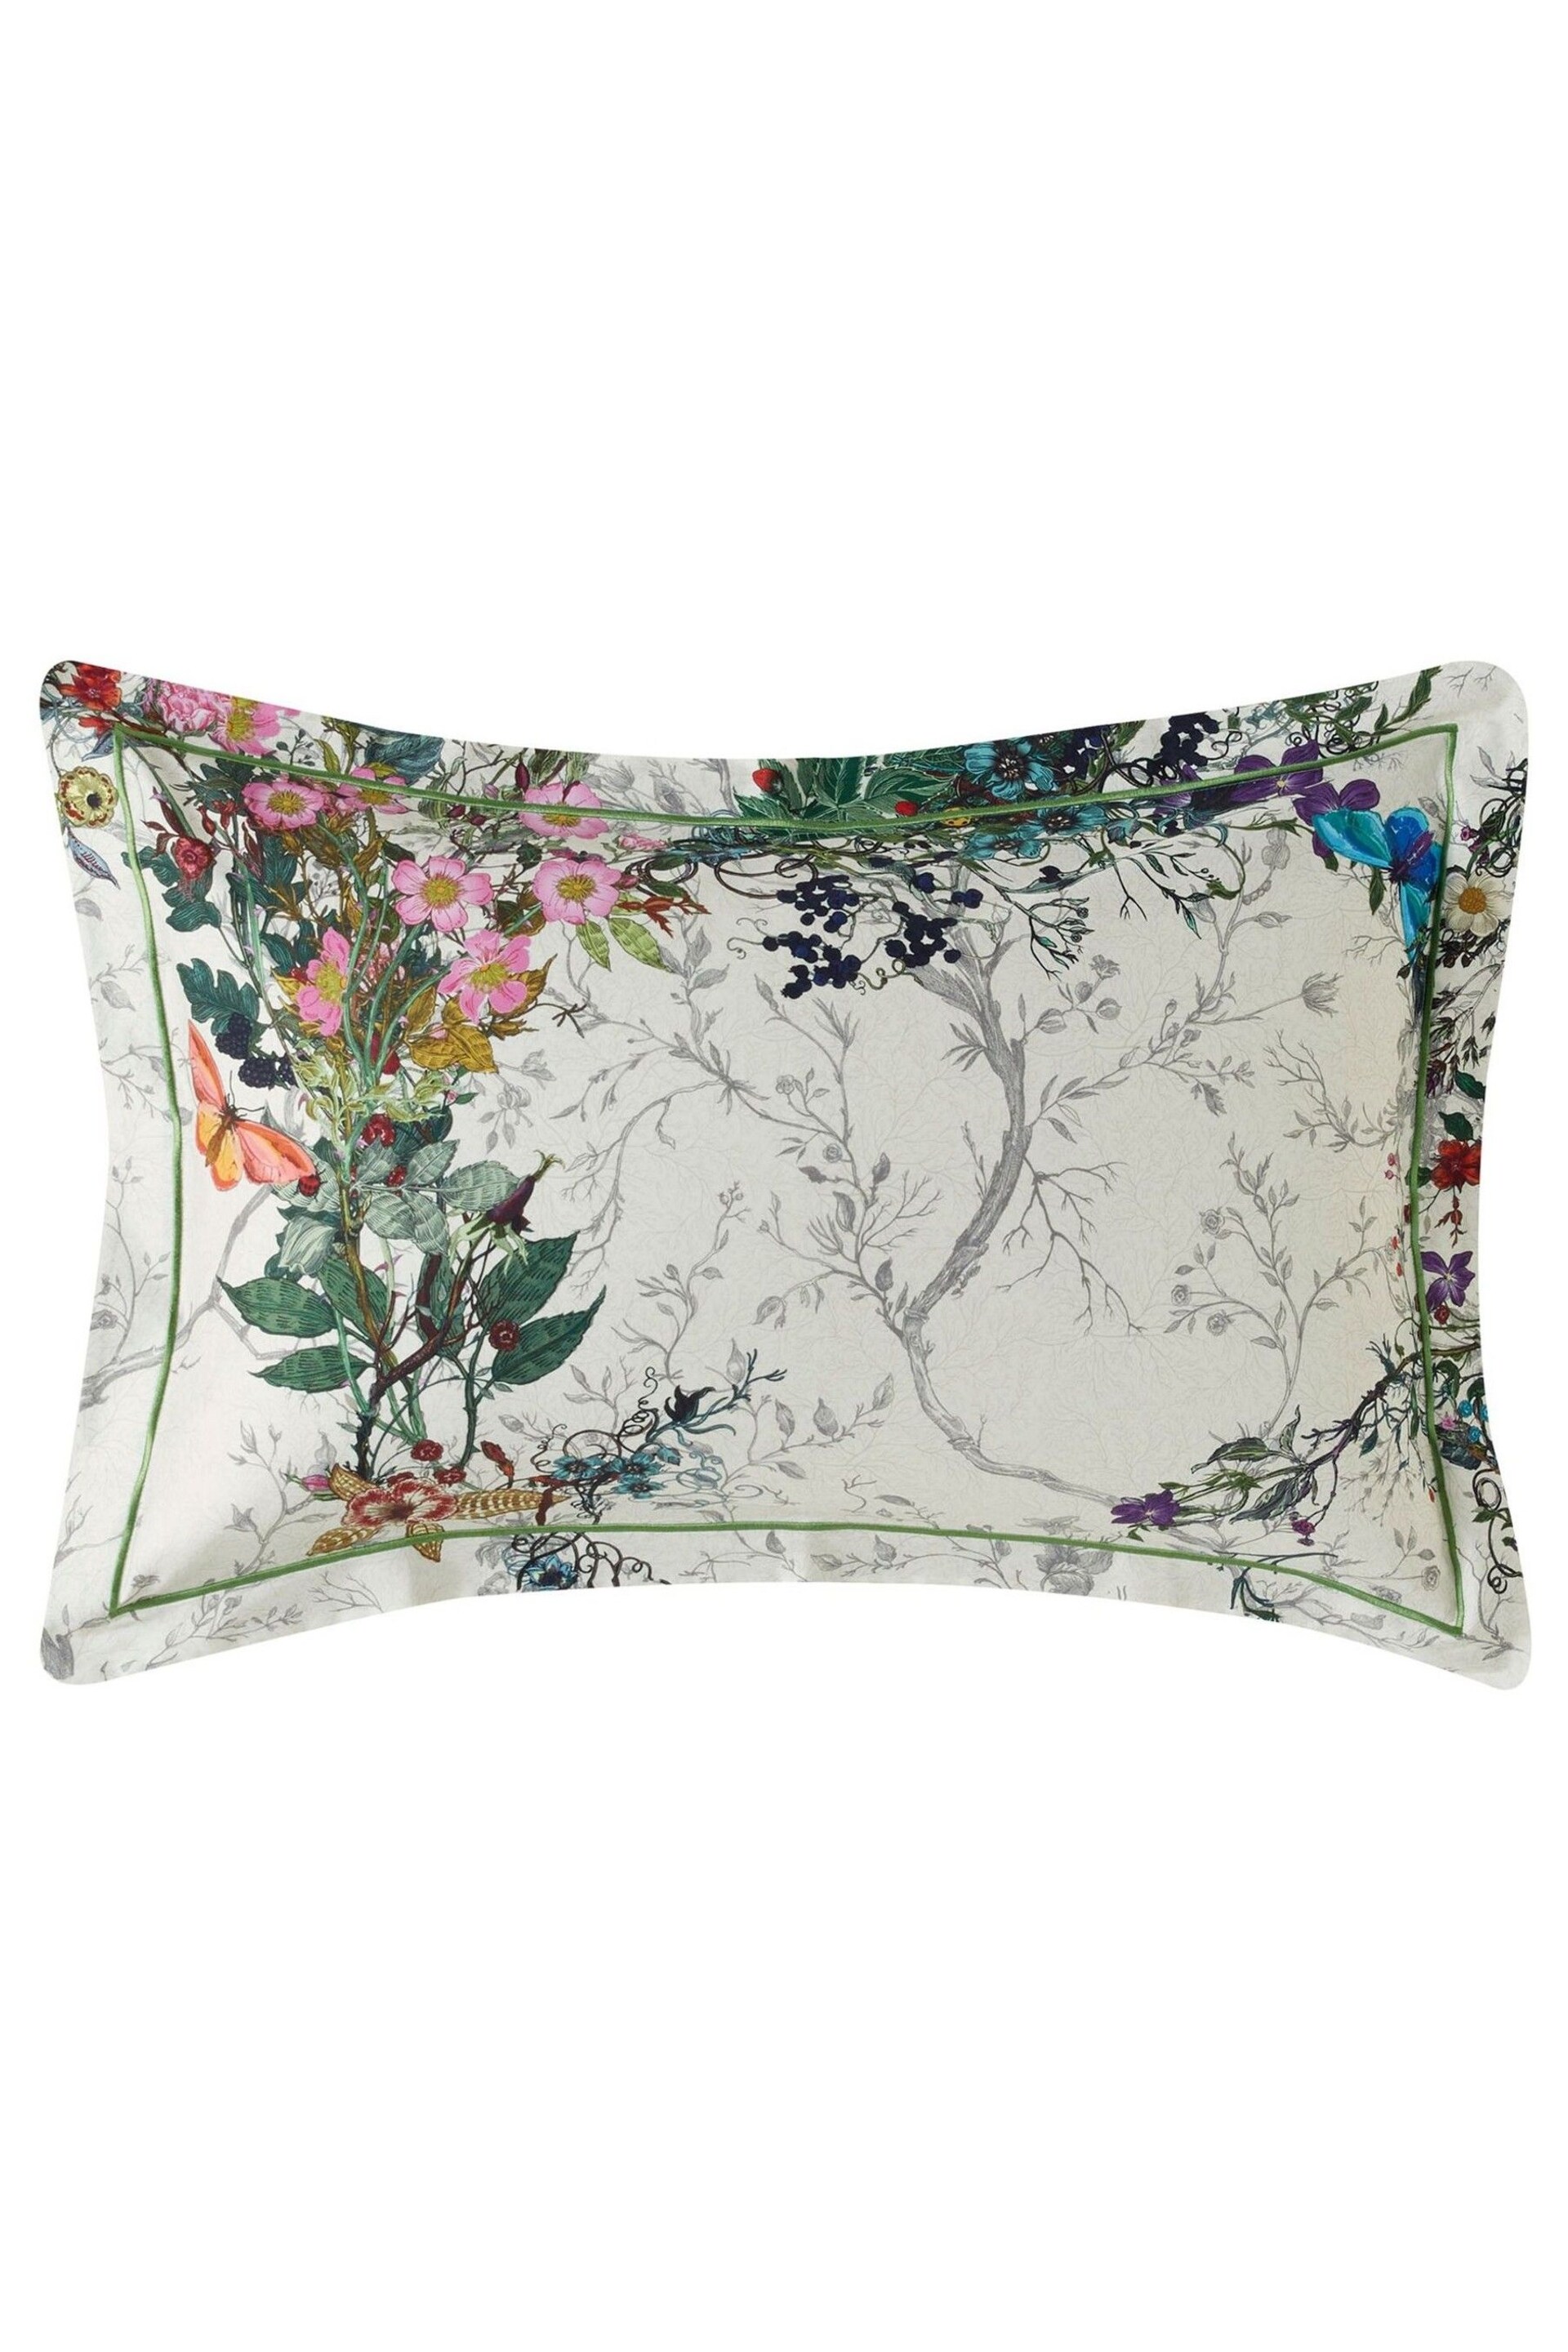 Timorous Beasties Dove Bloomsbury Garden Pillowcases Set Of 2 - Image 3 of 4